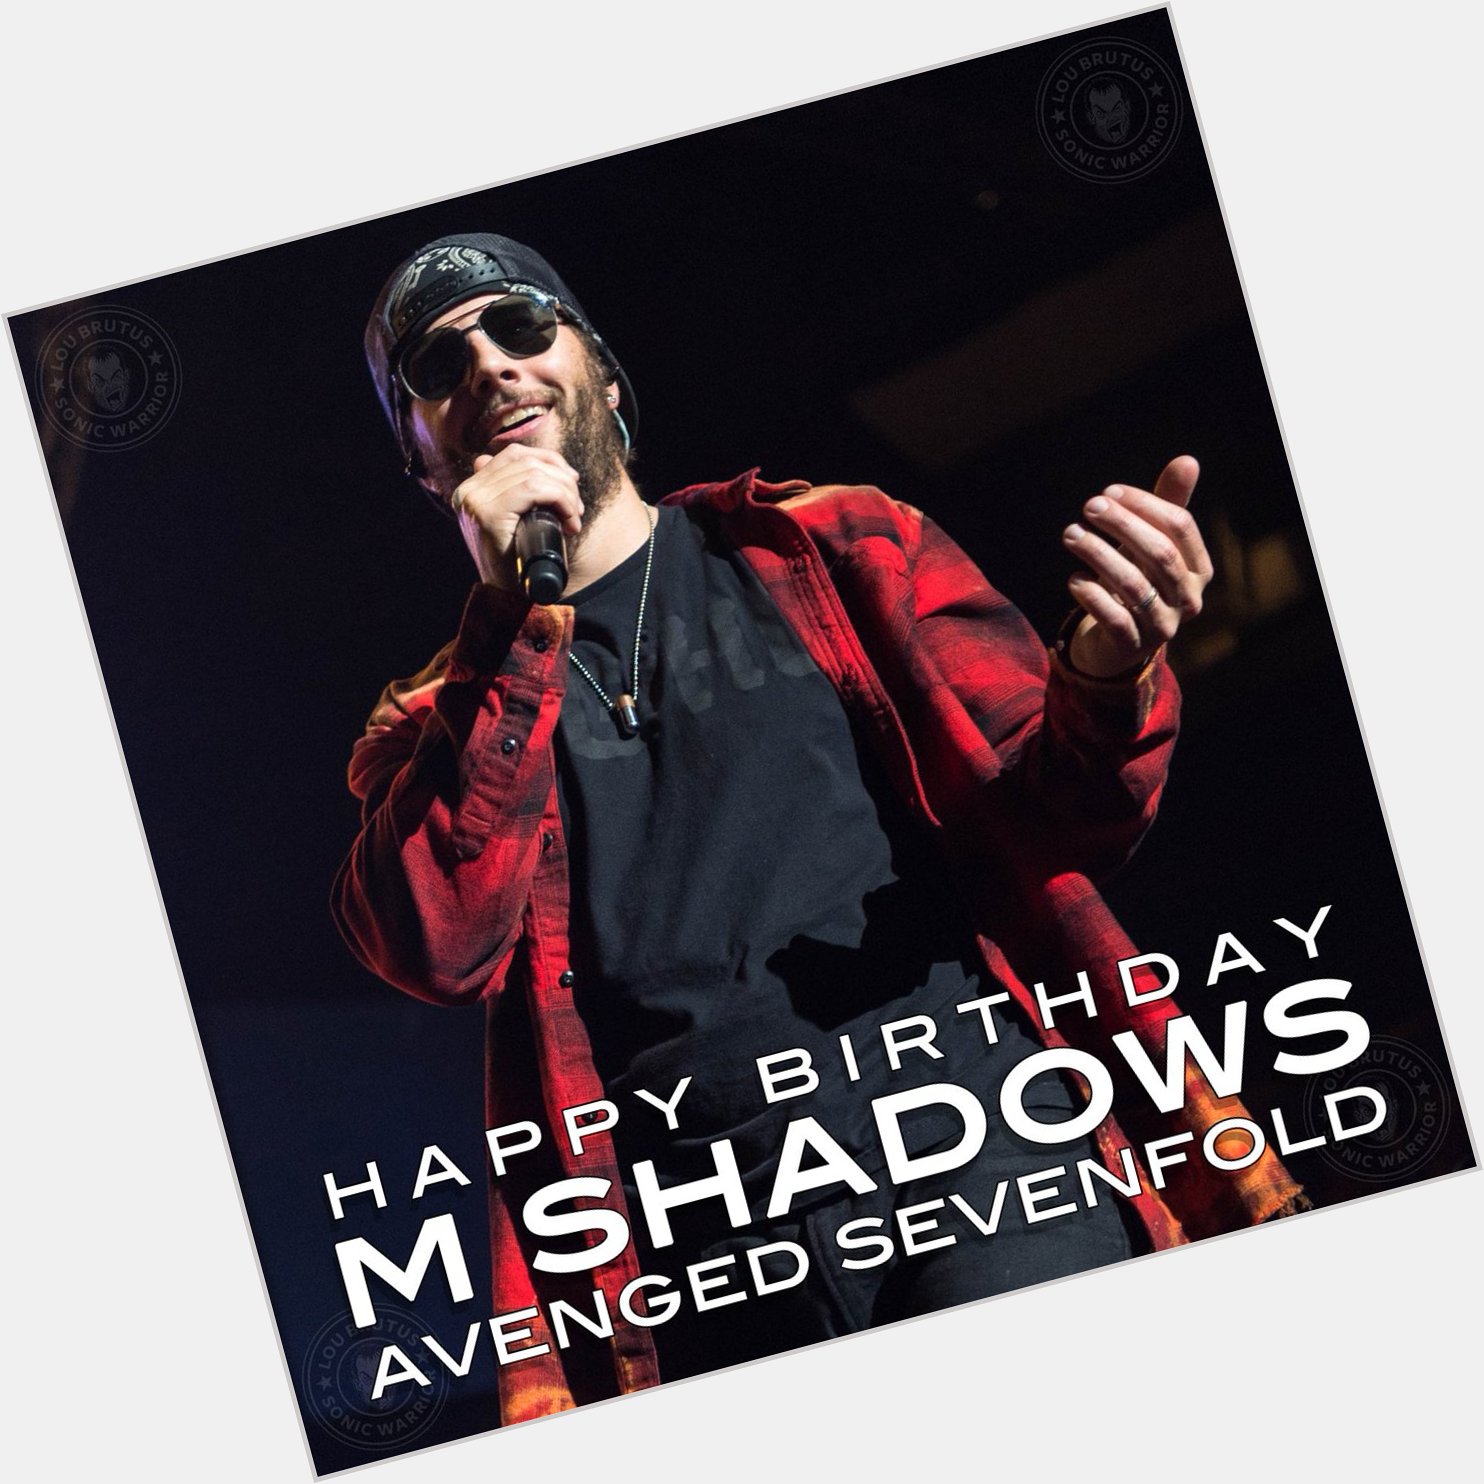 HBD M! Happy Birthday to M Shadows of Avenged Sevenfold!   